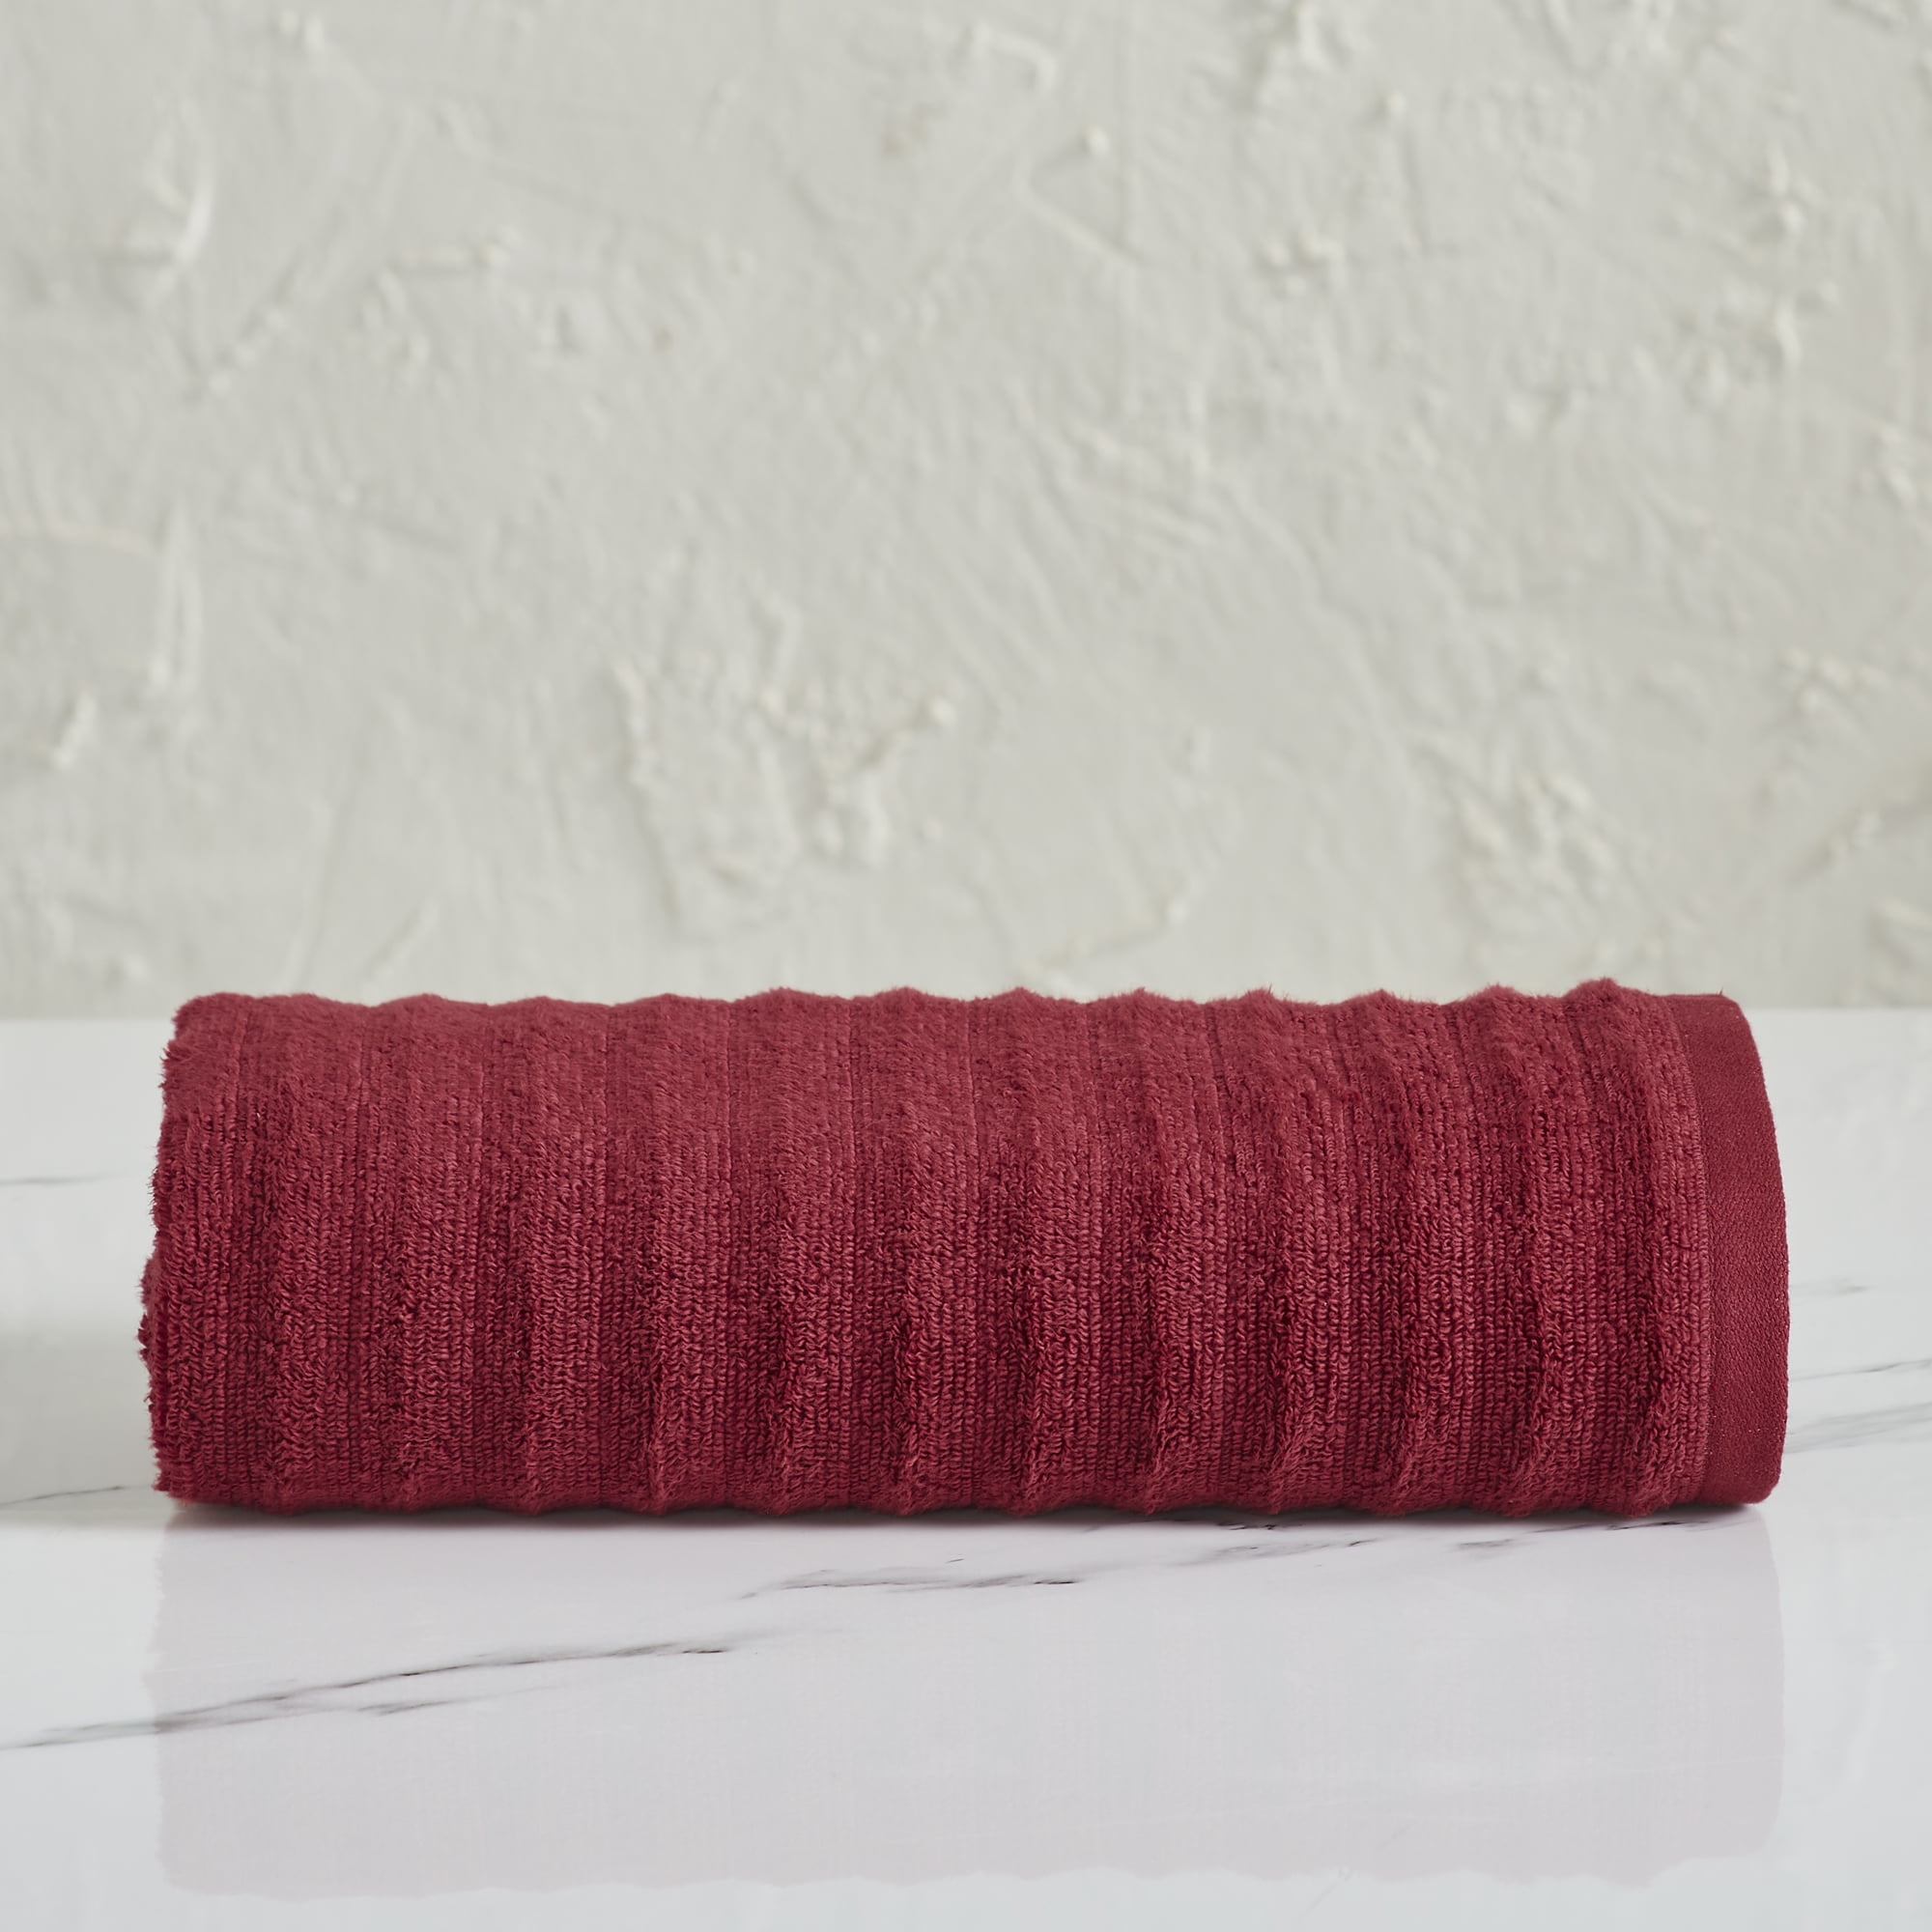 Mainstays Performance Textured Bath Towel, 54 x 30, Red Sedona